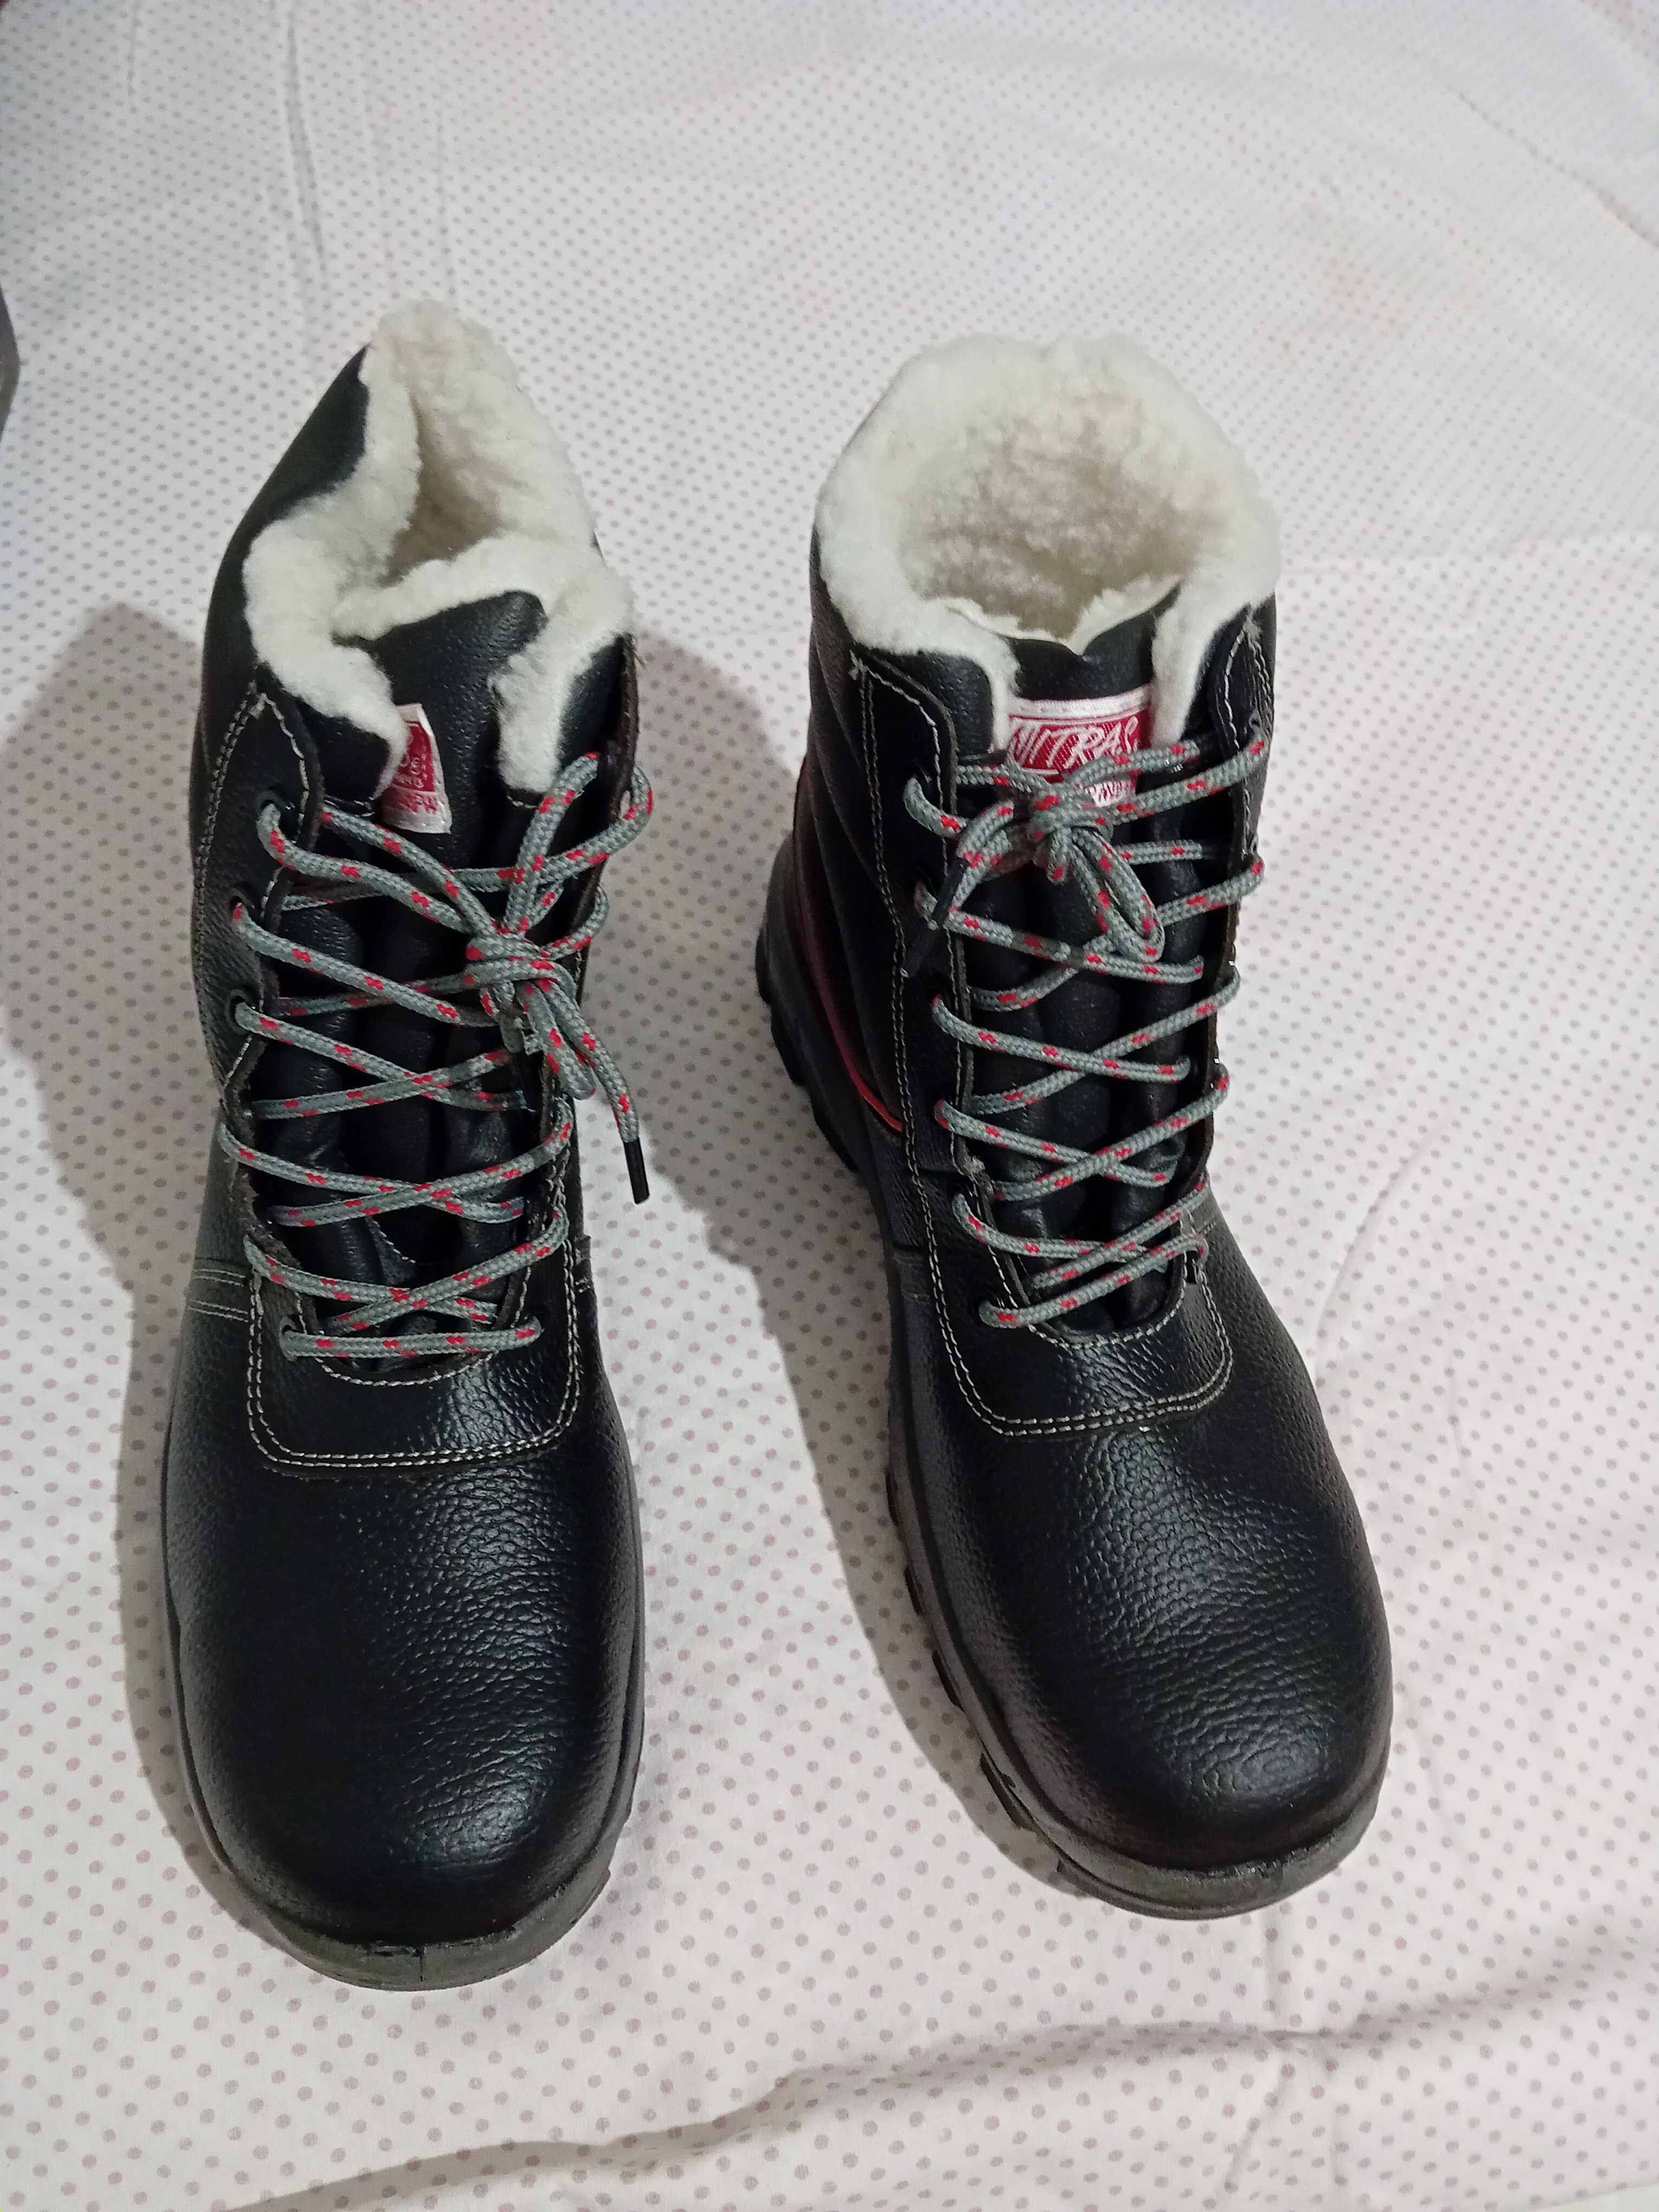 Продавам работни зимни обувки Nitras 7201 W MF 44 номер 2 комплекта